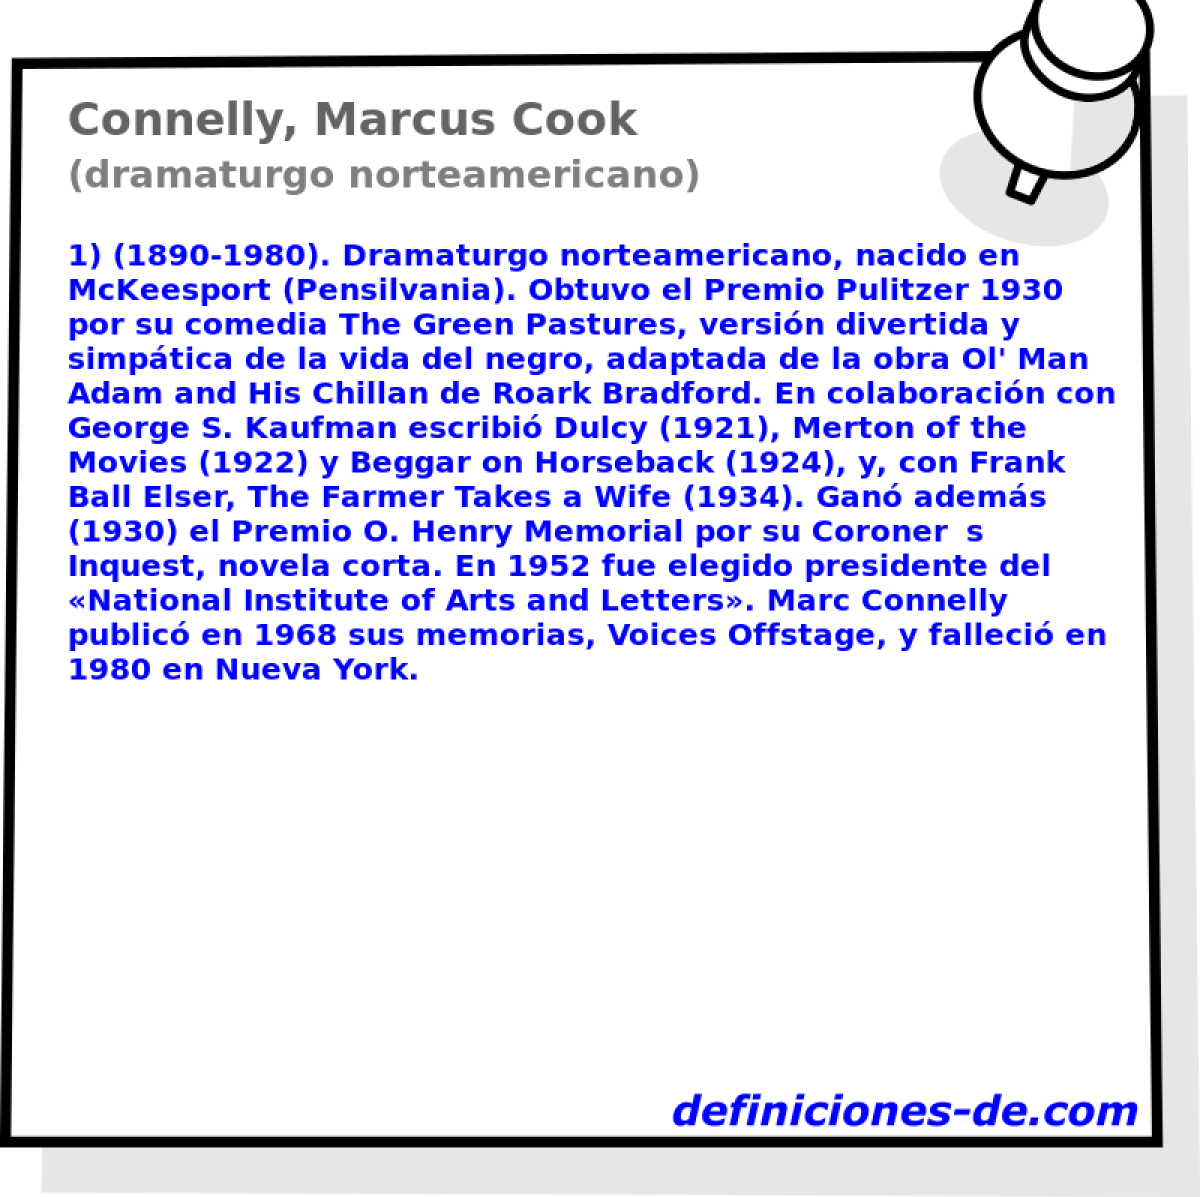 Connelly, Marcus Cook (dramaturgo norteamericano)